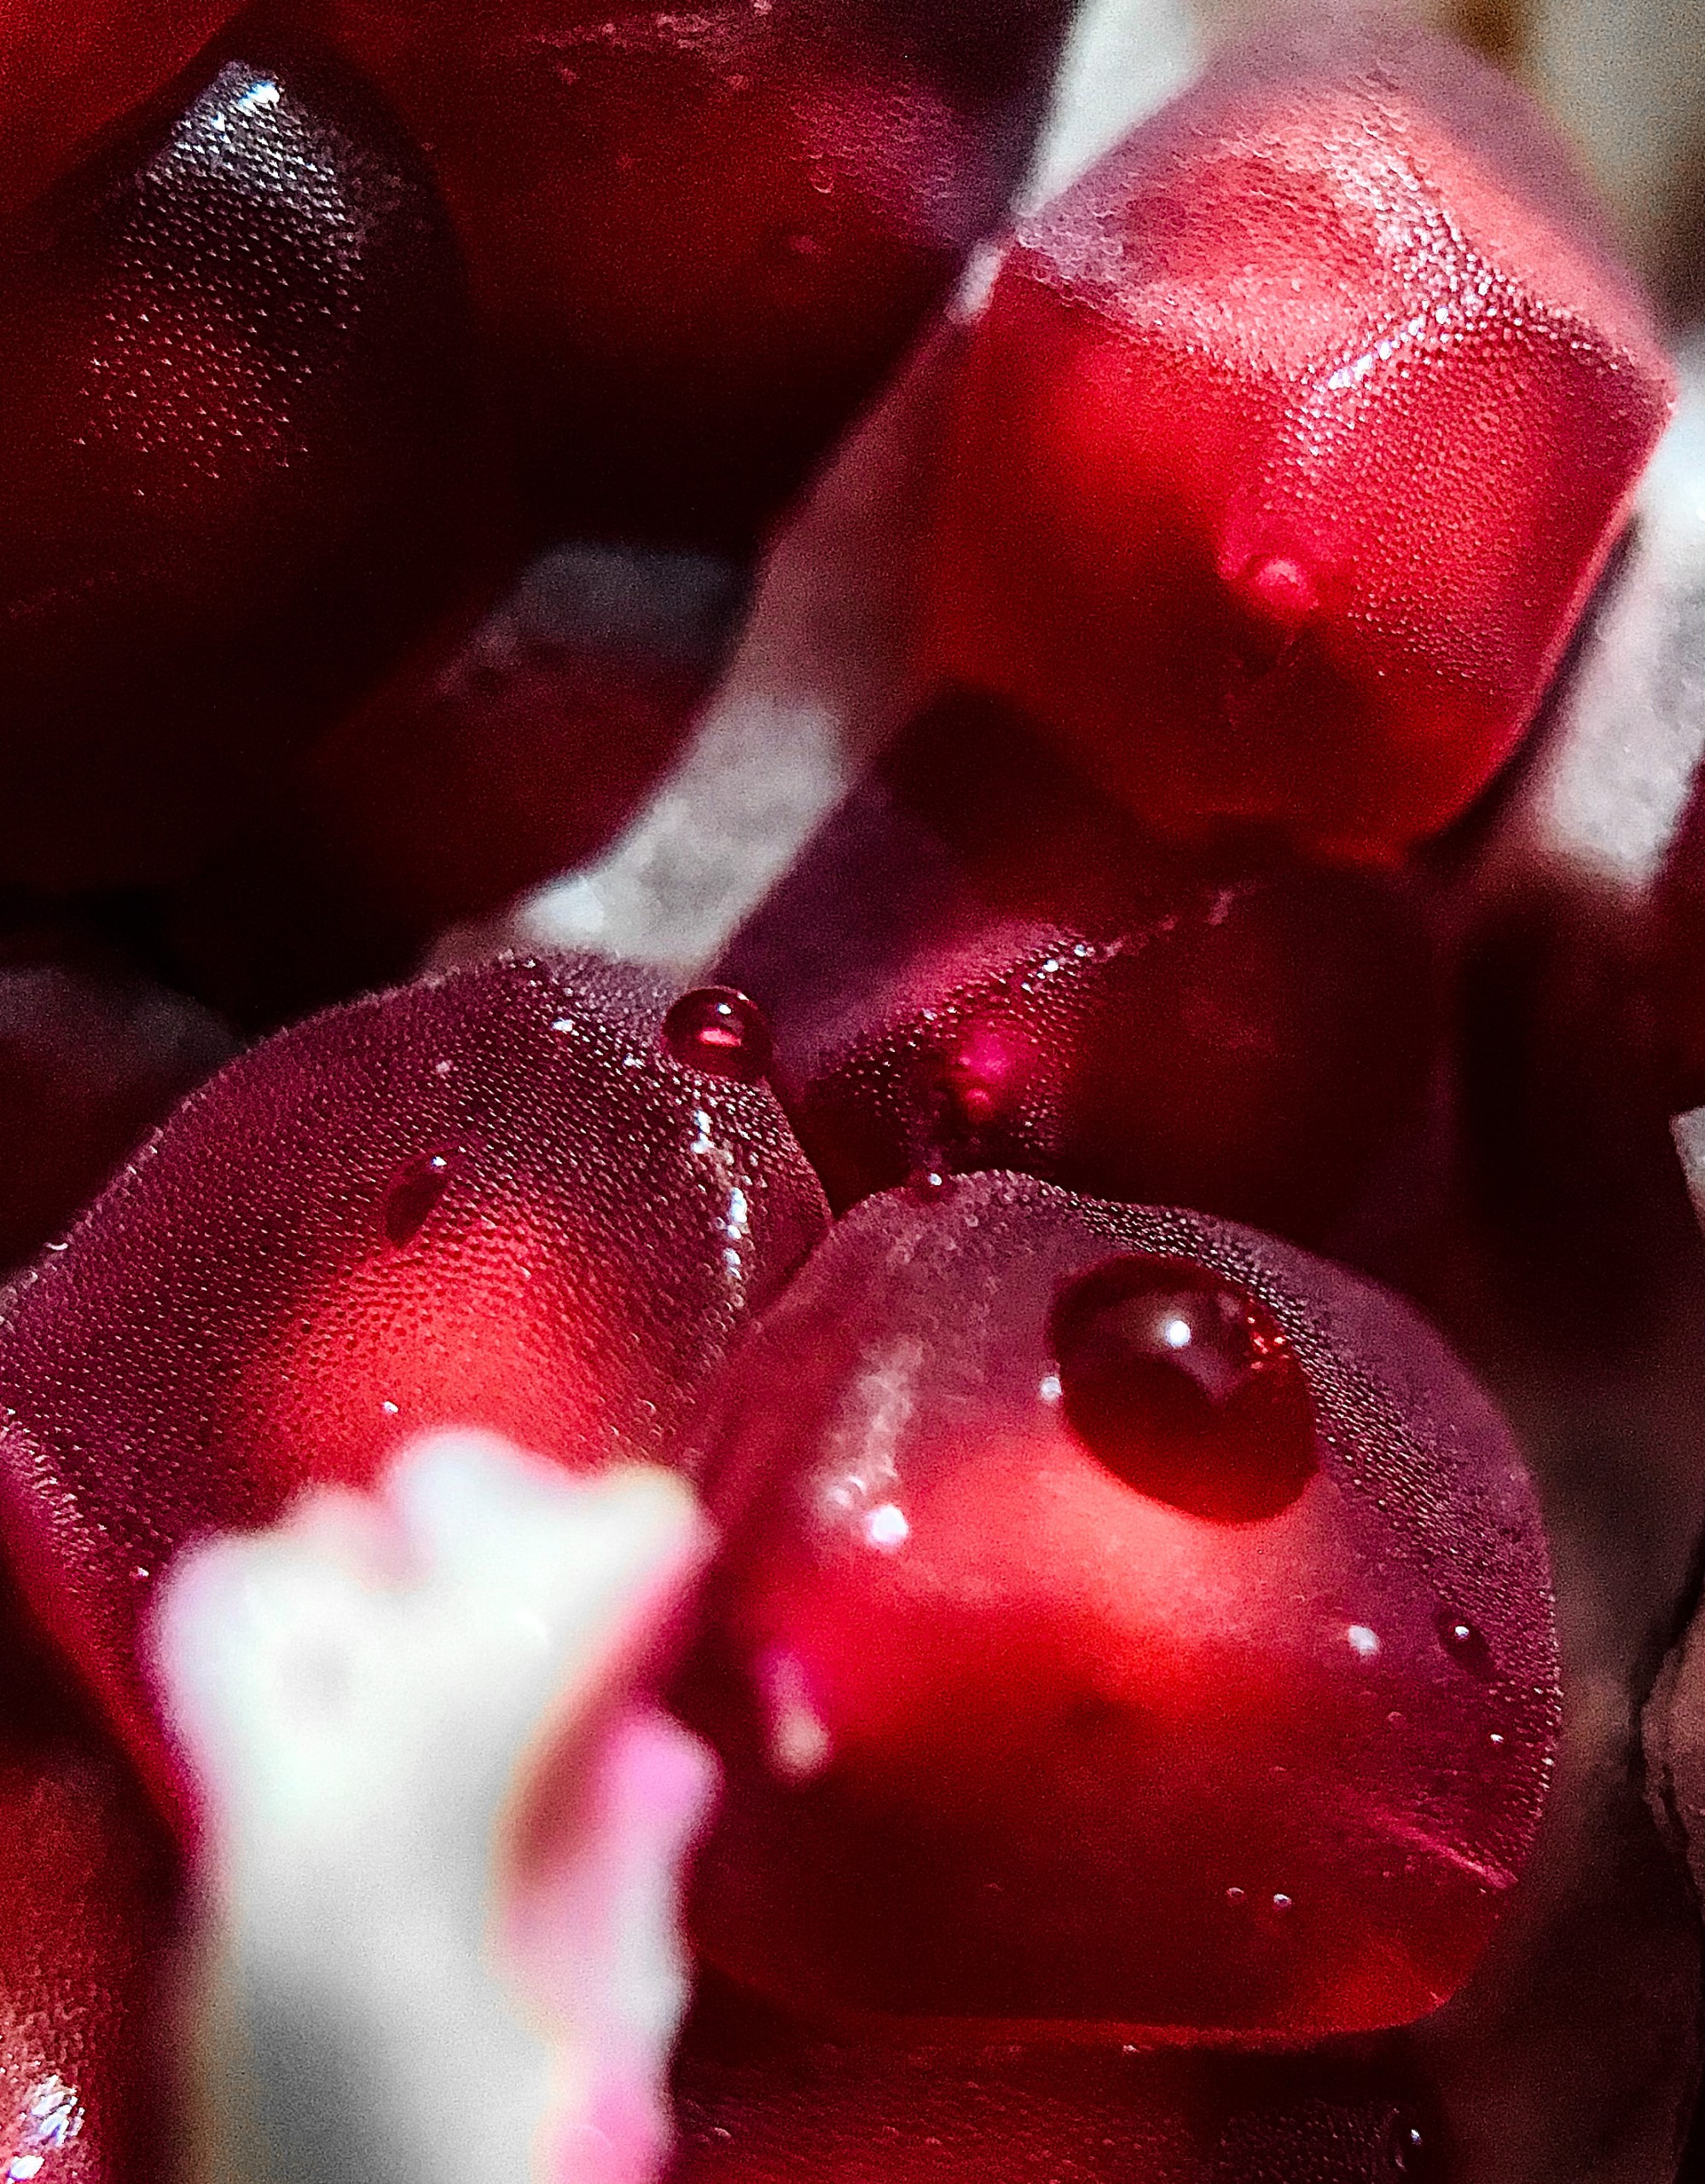 Fresh Pomegranate seeds